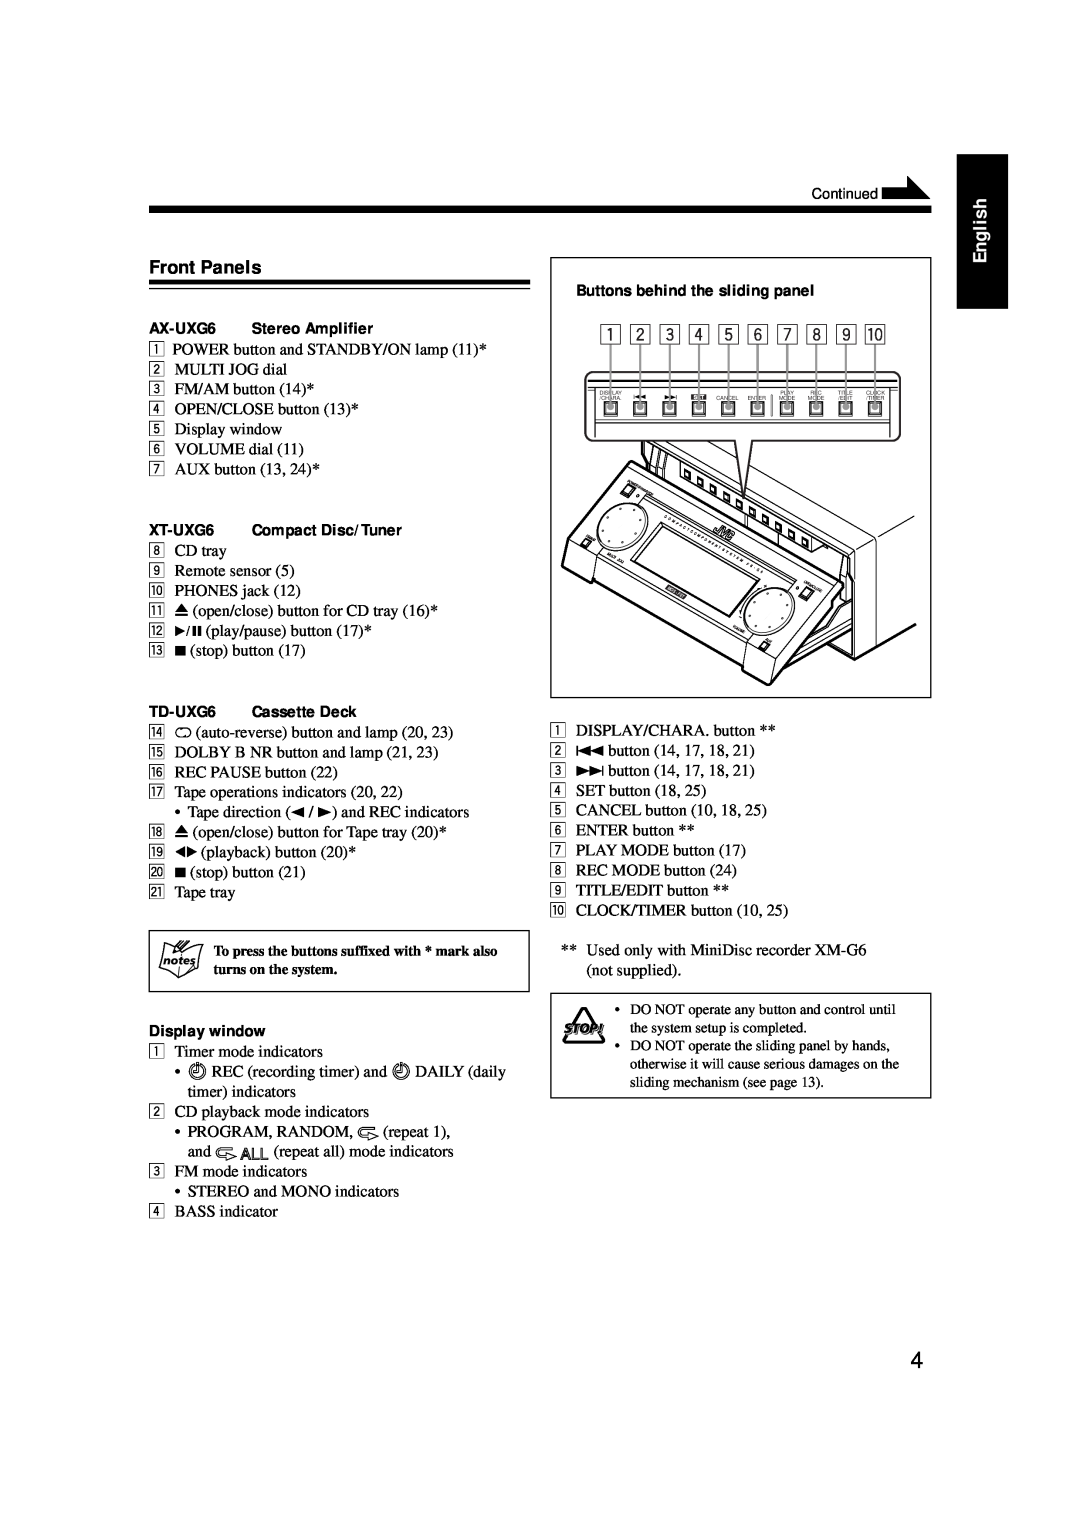 JVC LVT0375-001A English, AX-UXG6, Stereo Amplifier, XT-UXG6, Compact Disc/Tuner, TD-UXG6, Front Panels, Display window 